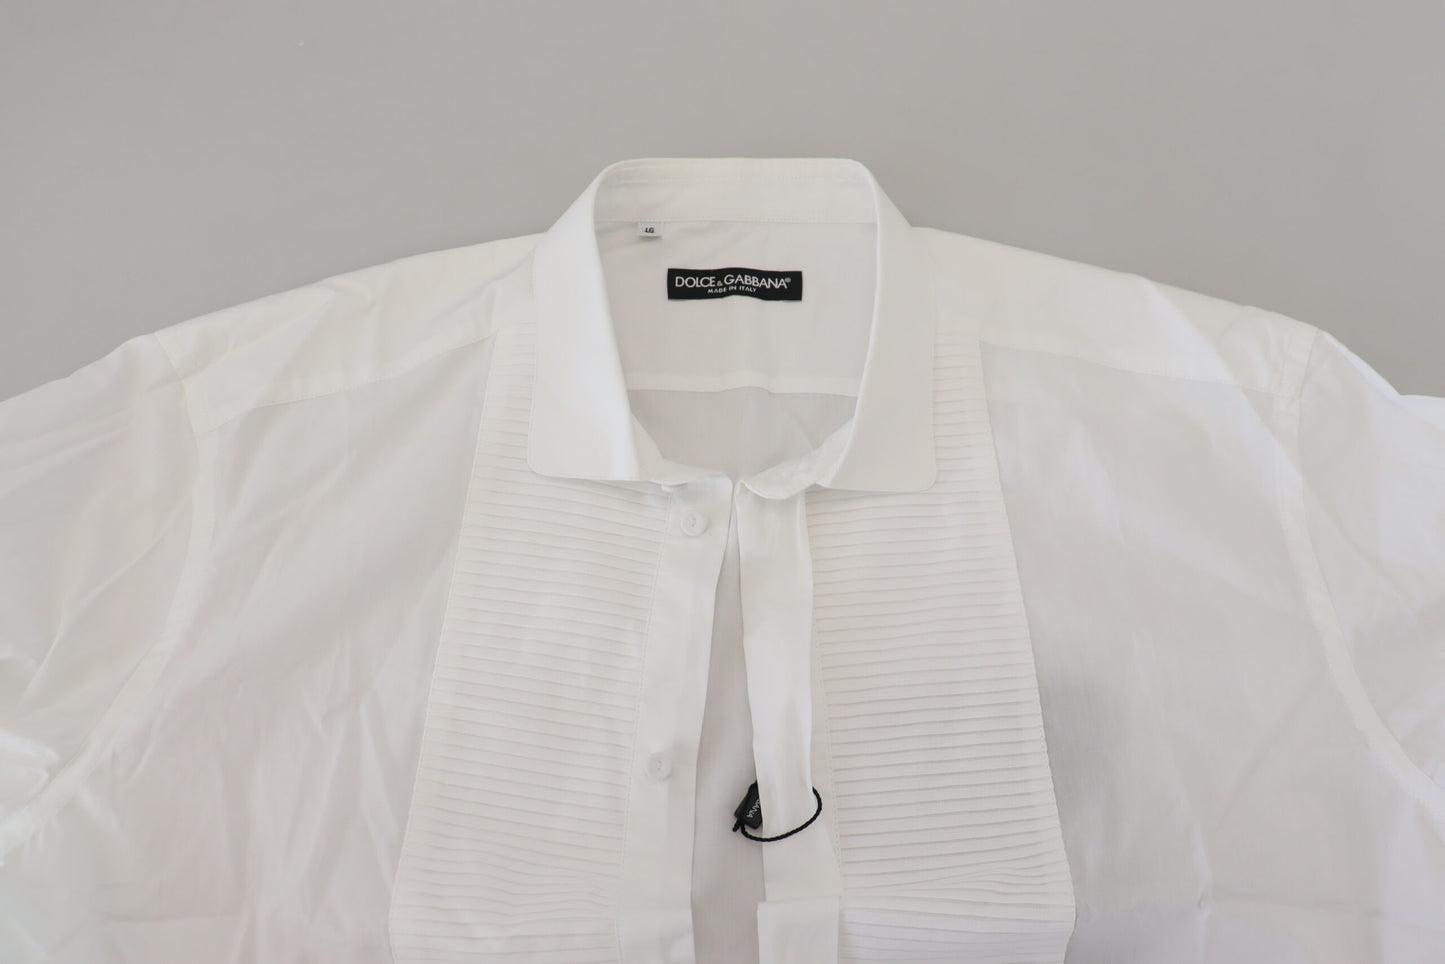 Exquisite White Cotton Formal Shirt